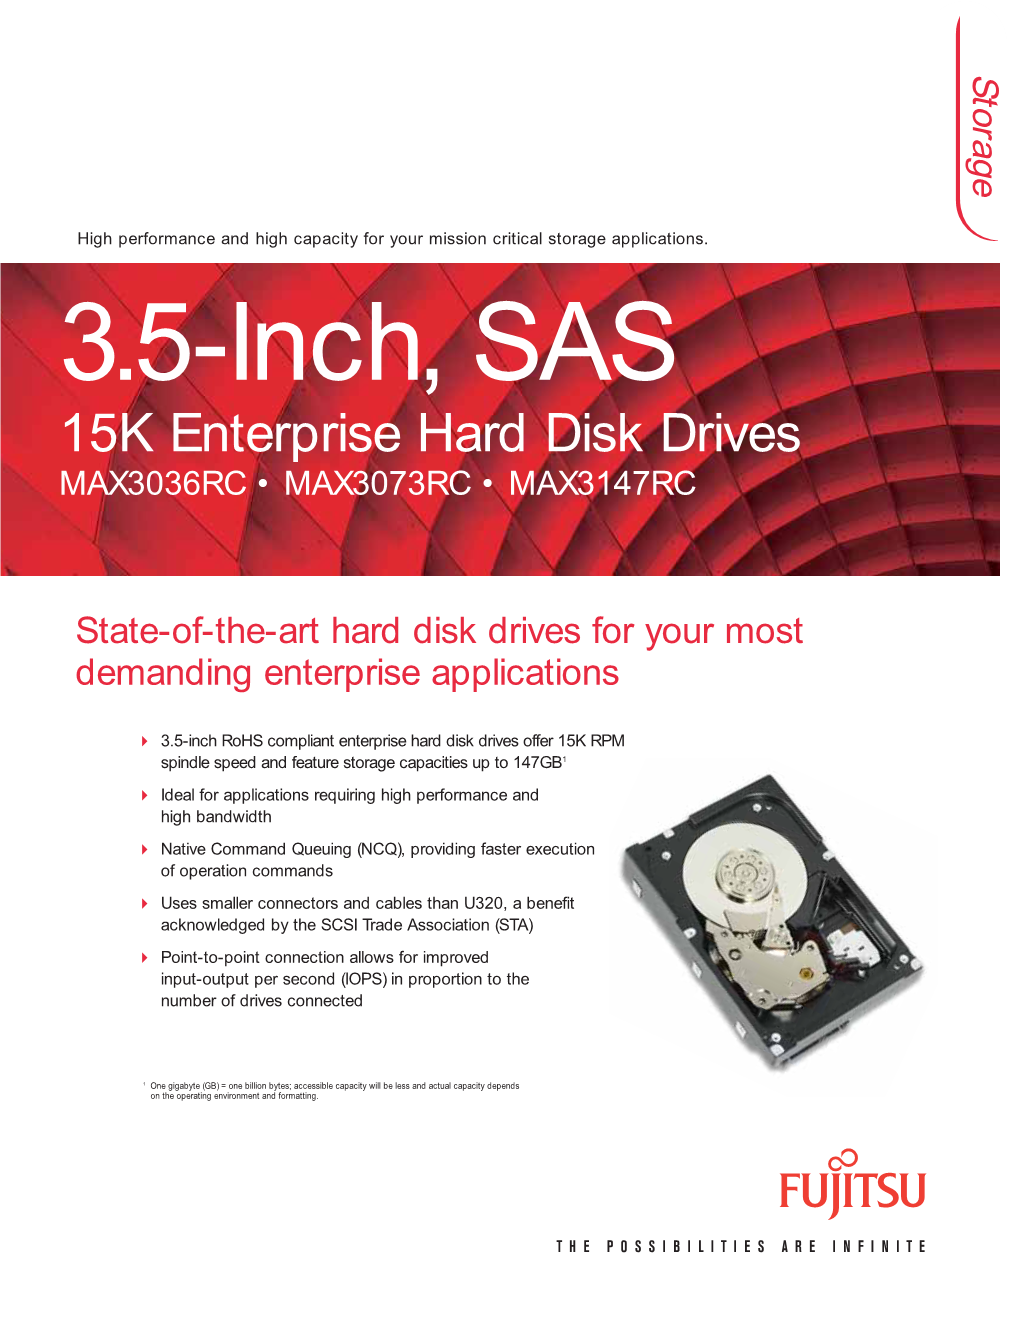 3.5-Inch, SAS 15K Enterprise Hard Disk Drives MAX3036RC • MAX3073RC • MAX3147RC